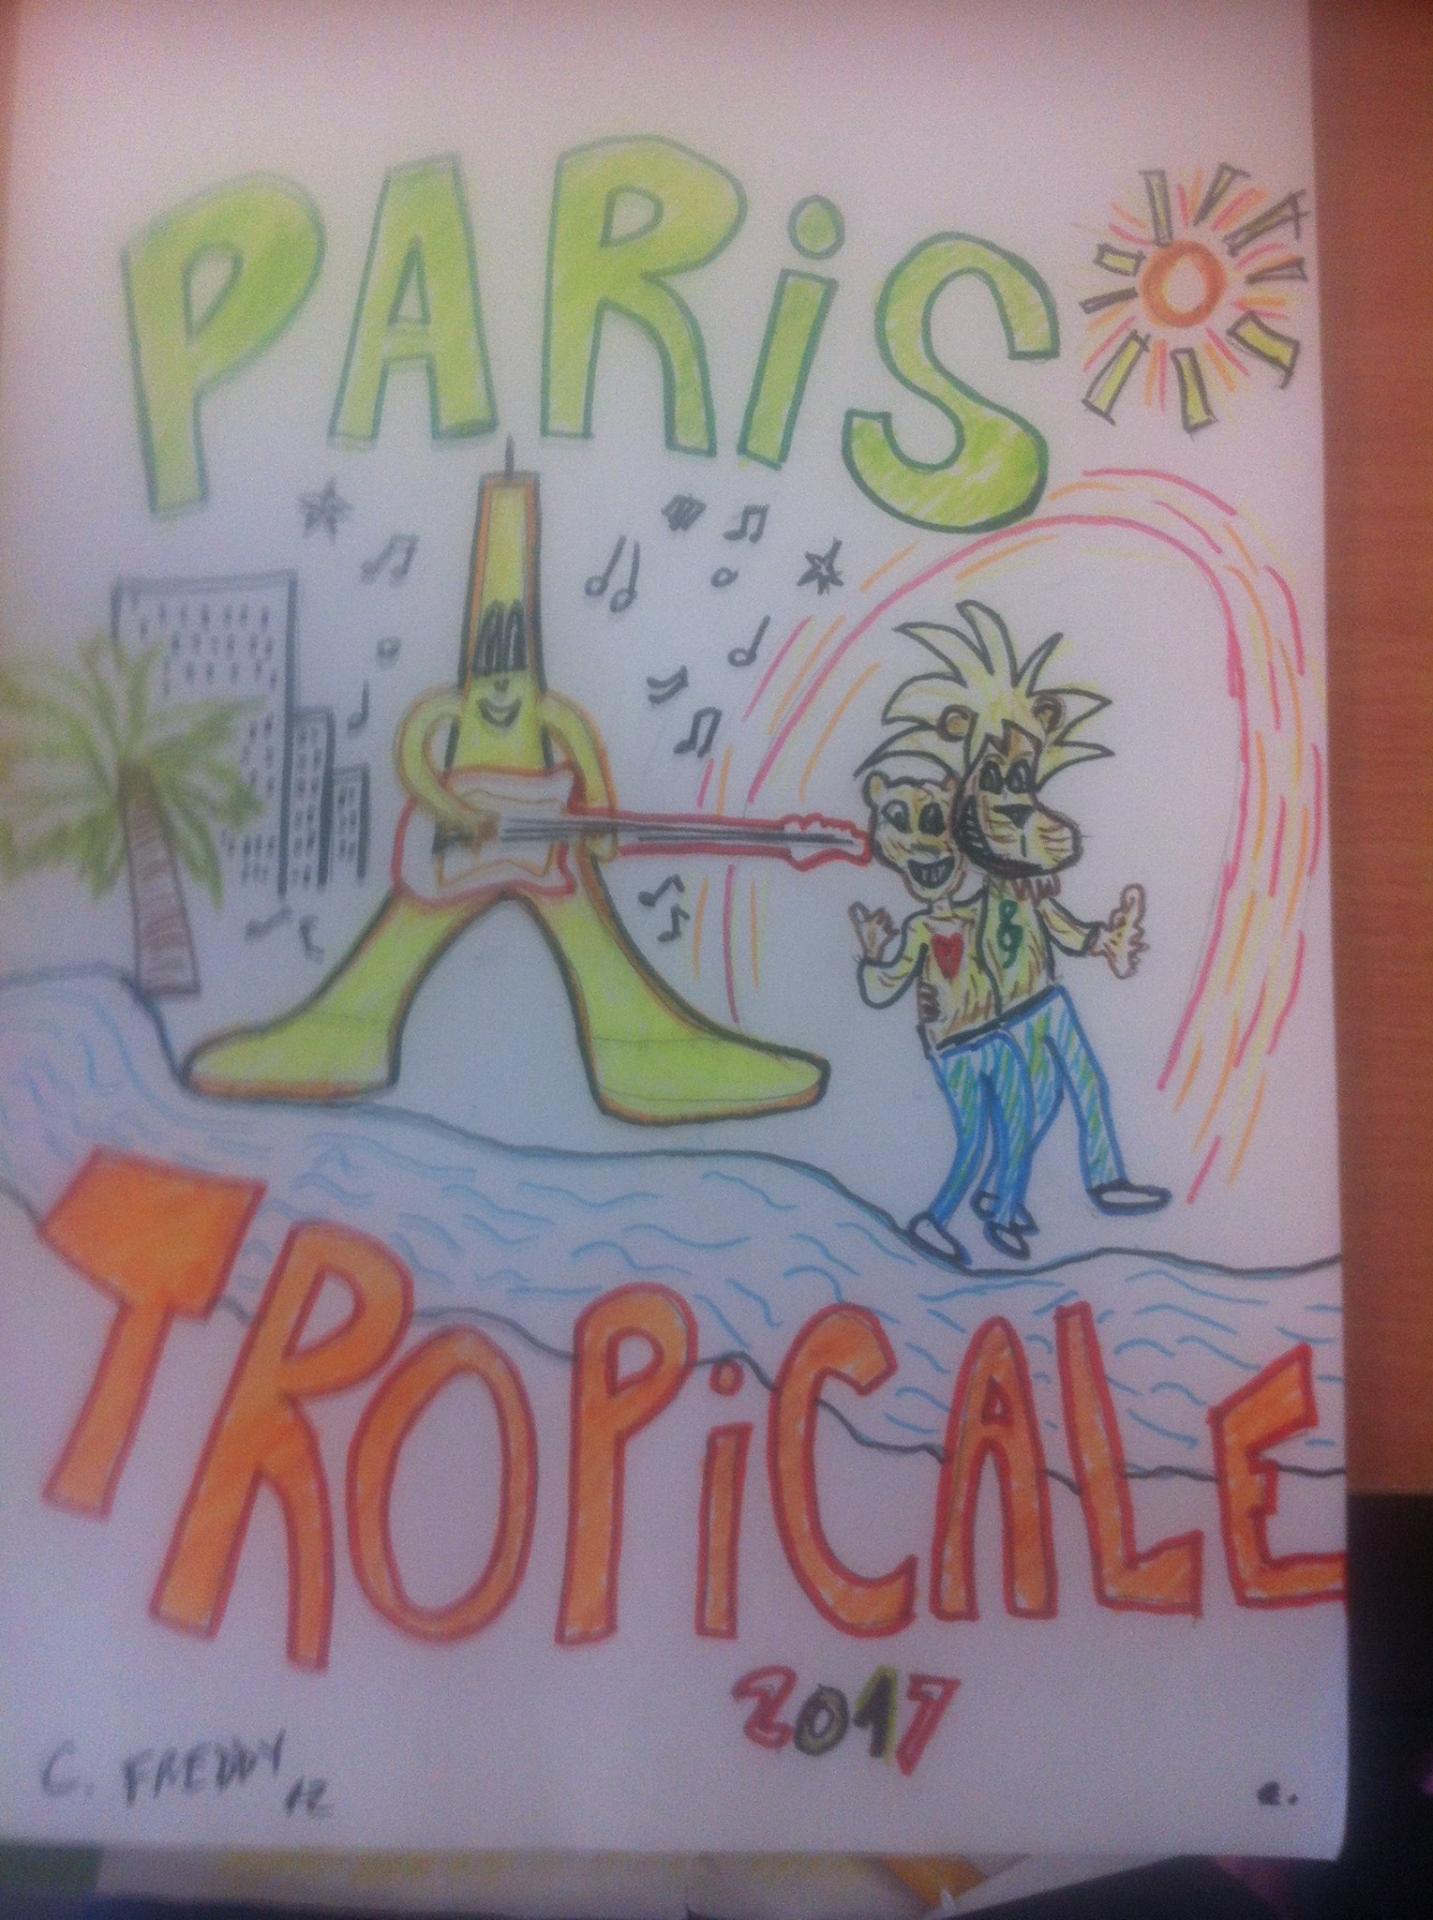 Paris tropicliberte